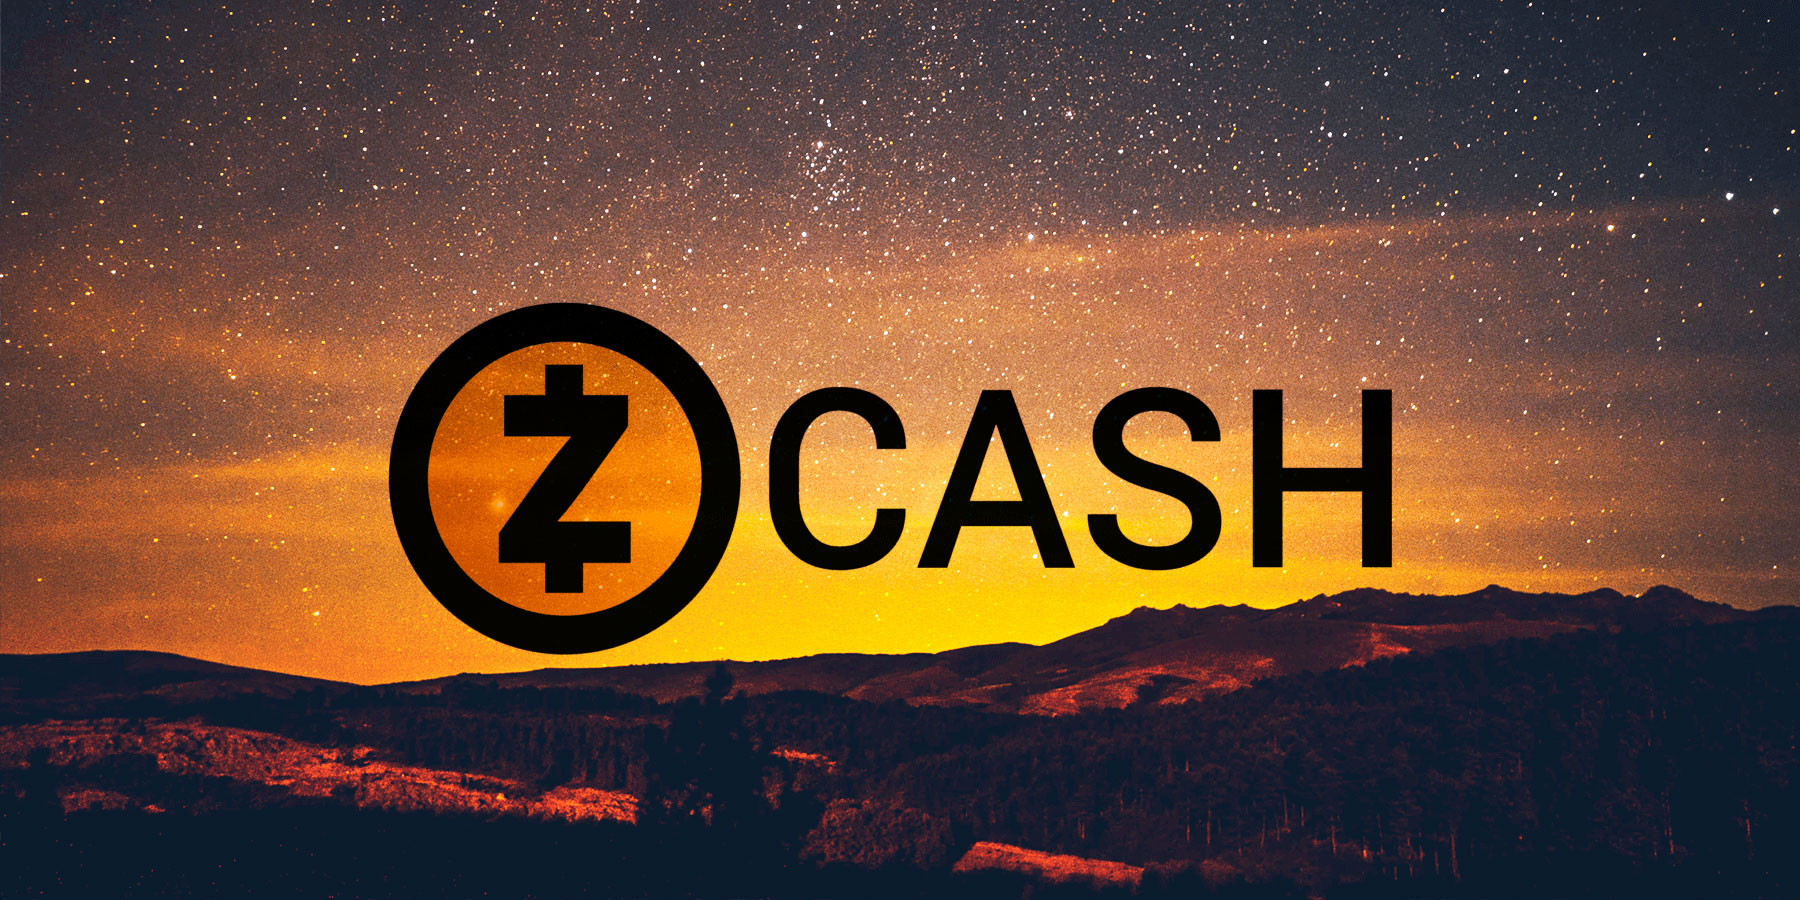  zcash mining btc market those bitcoin crypto 